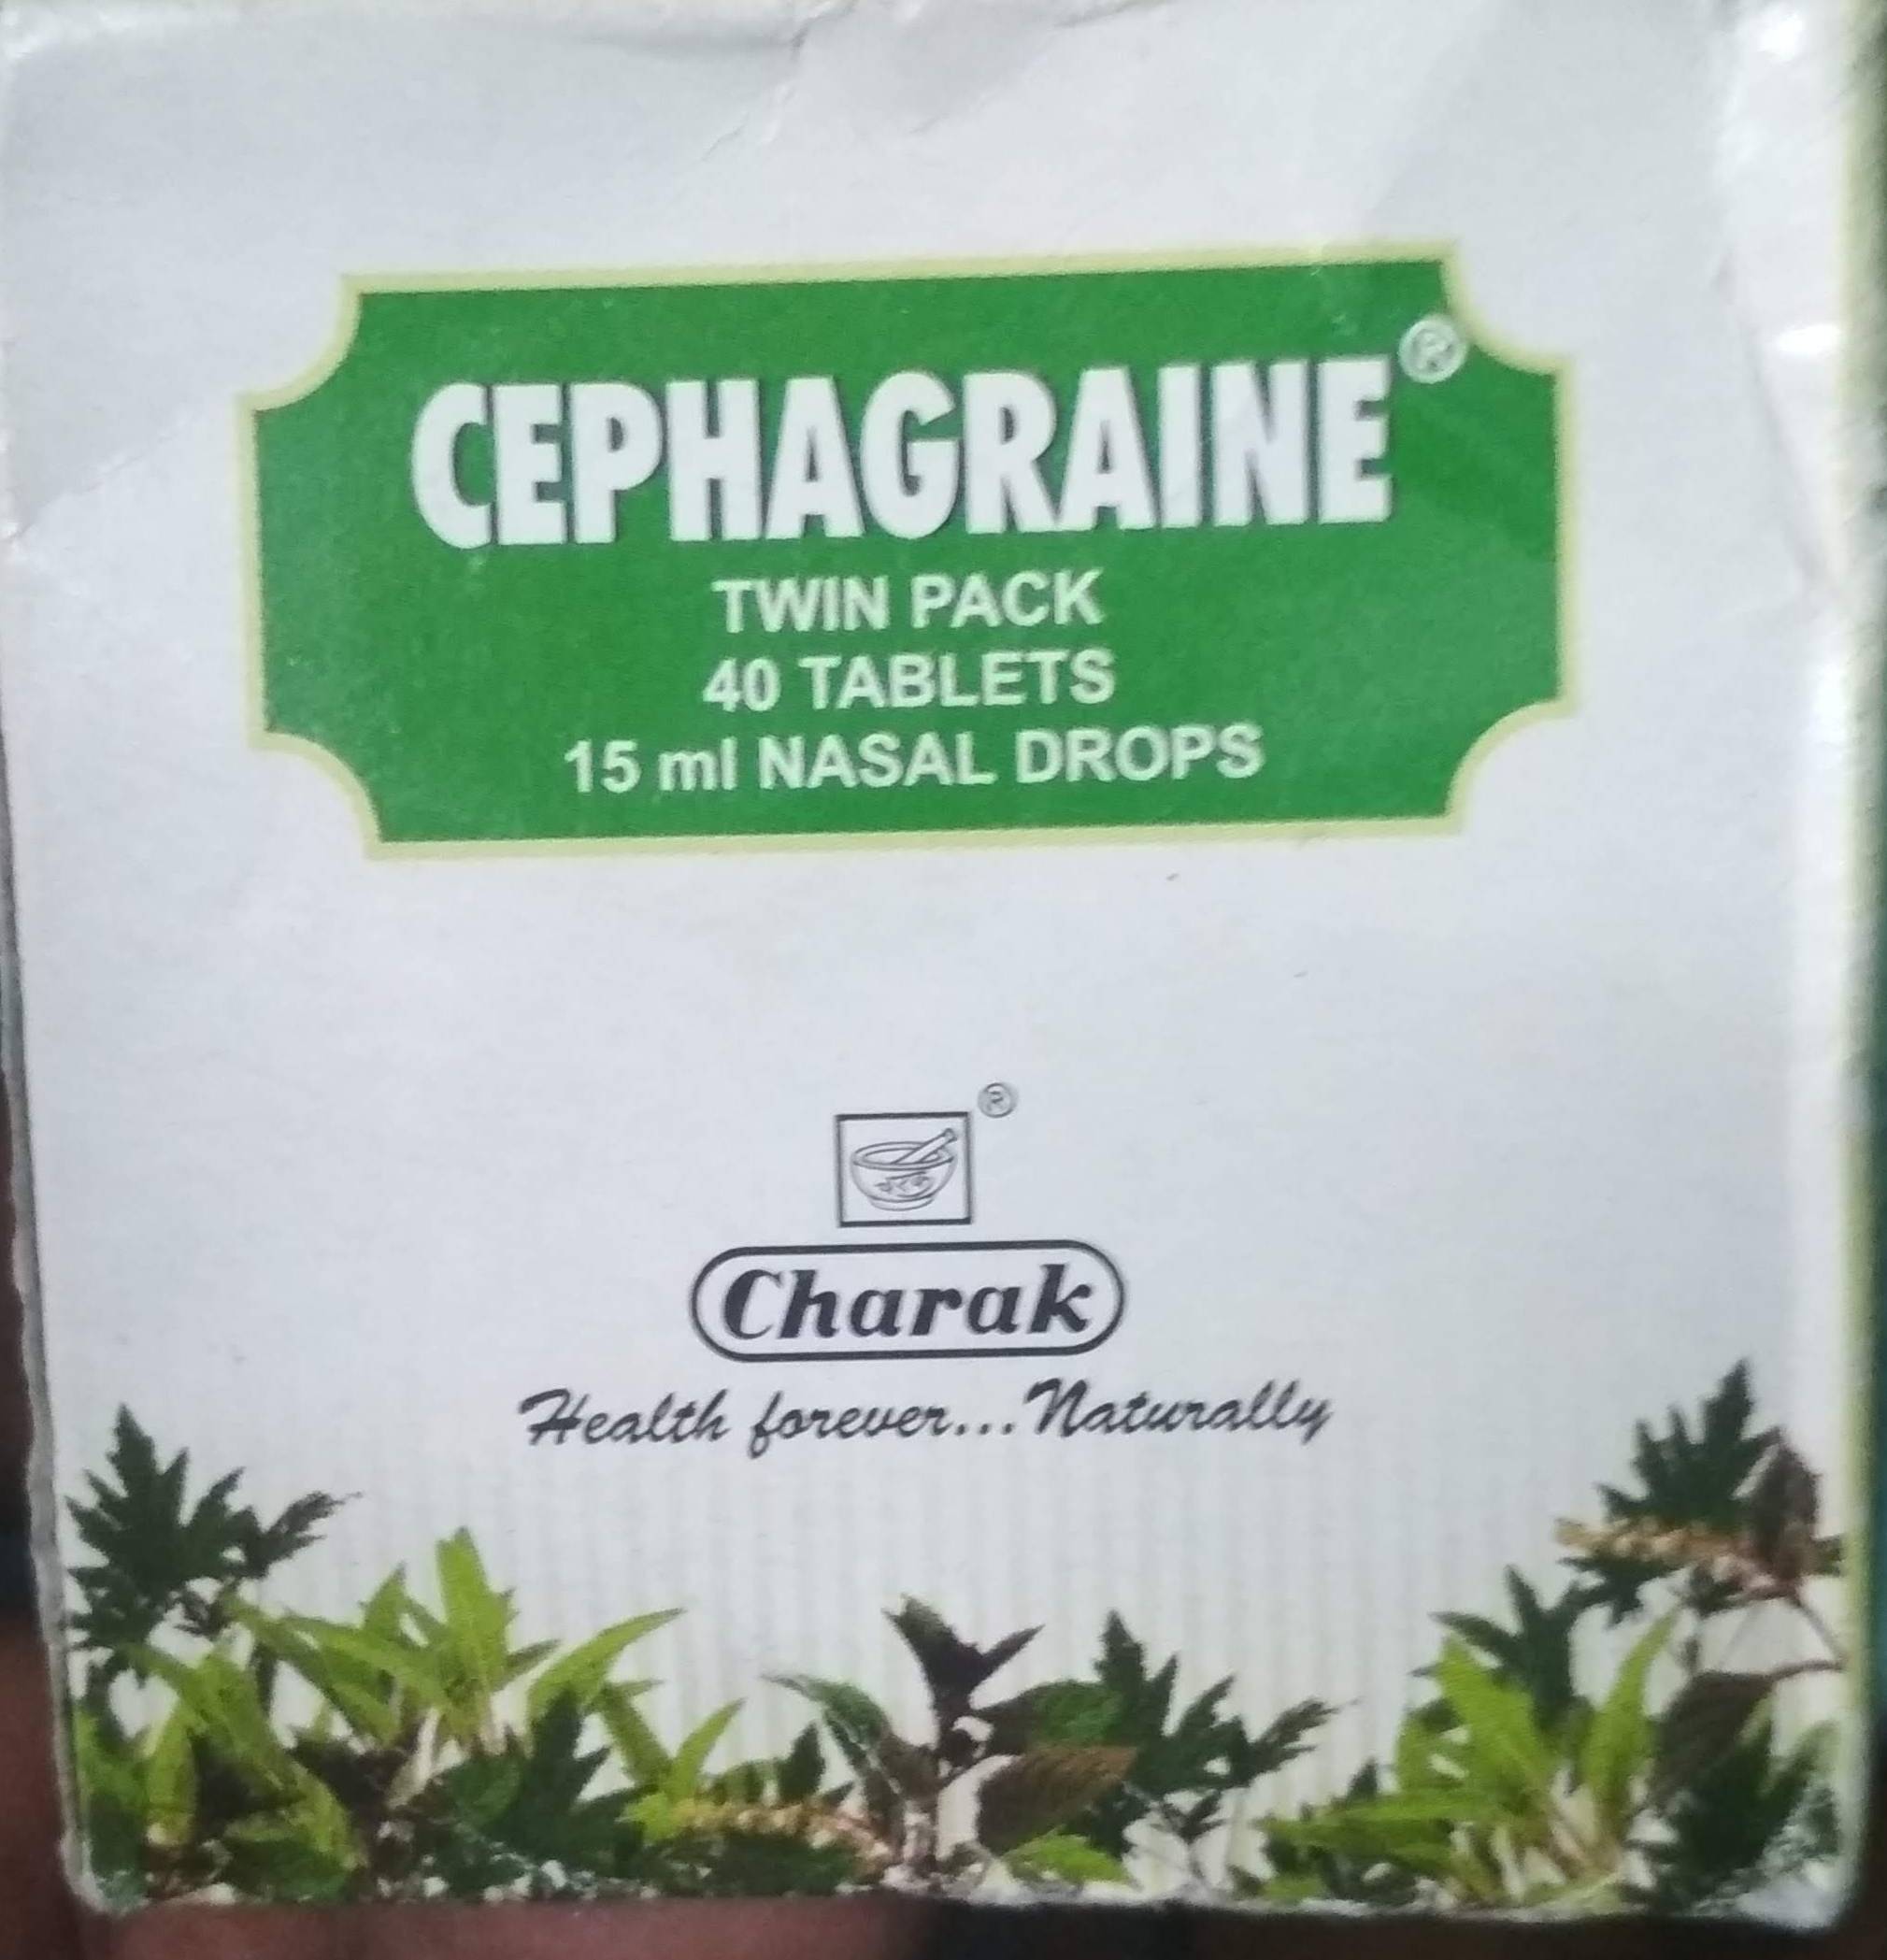 Cephagraine Twin Pack 40Tablets 15ml Nasal Drop Charak pharma mumbai